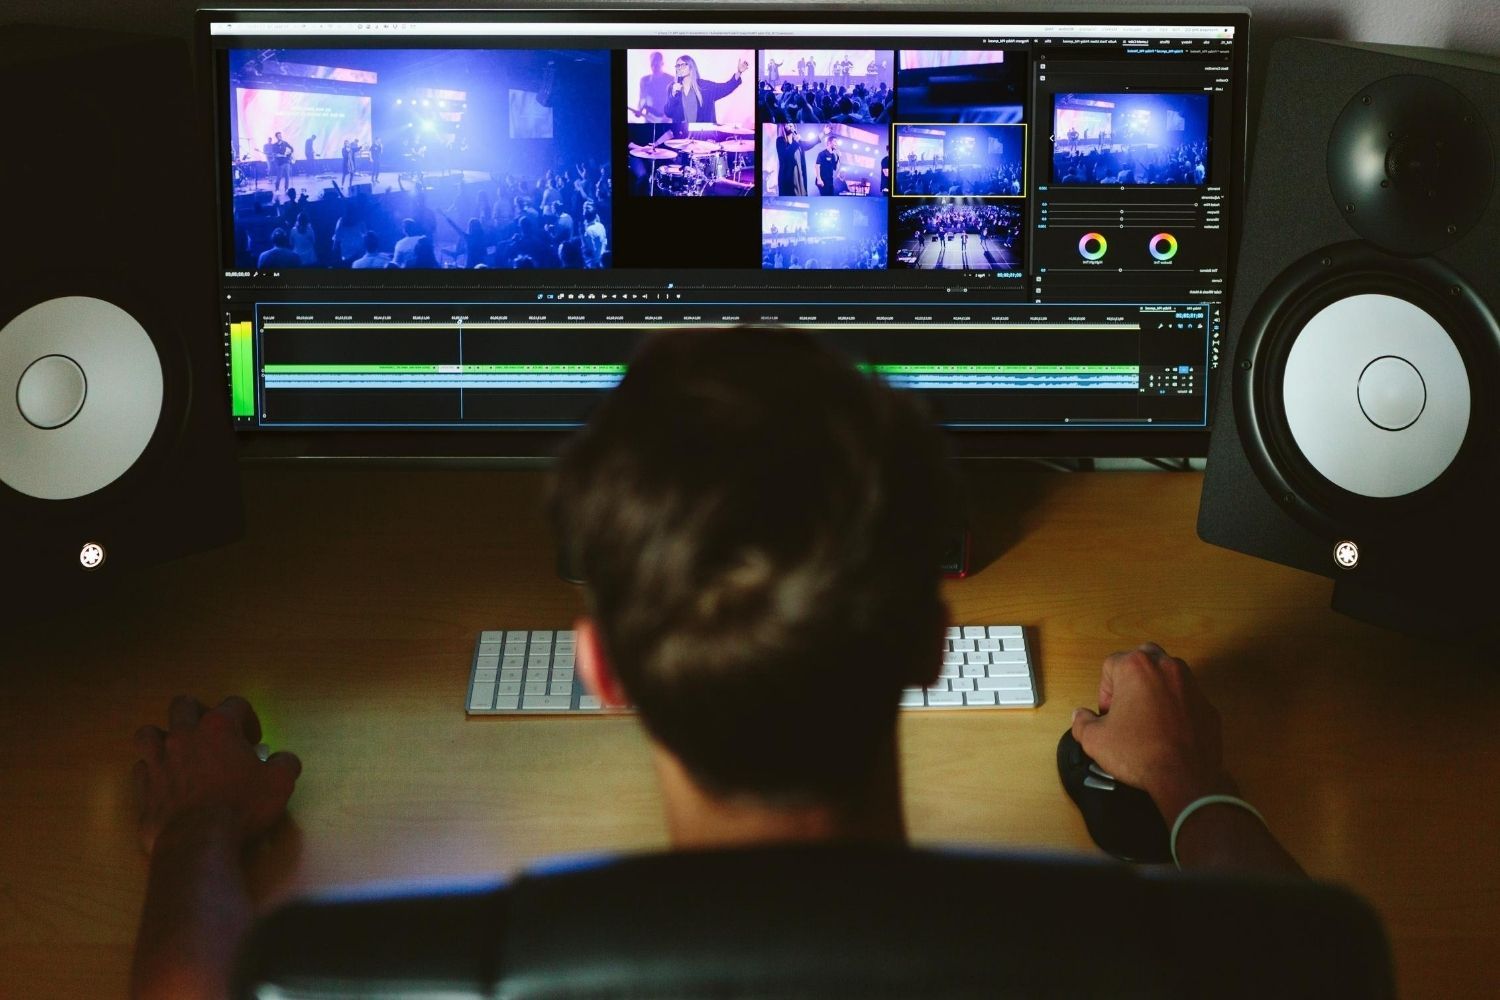 video editing software like camtasia studio